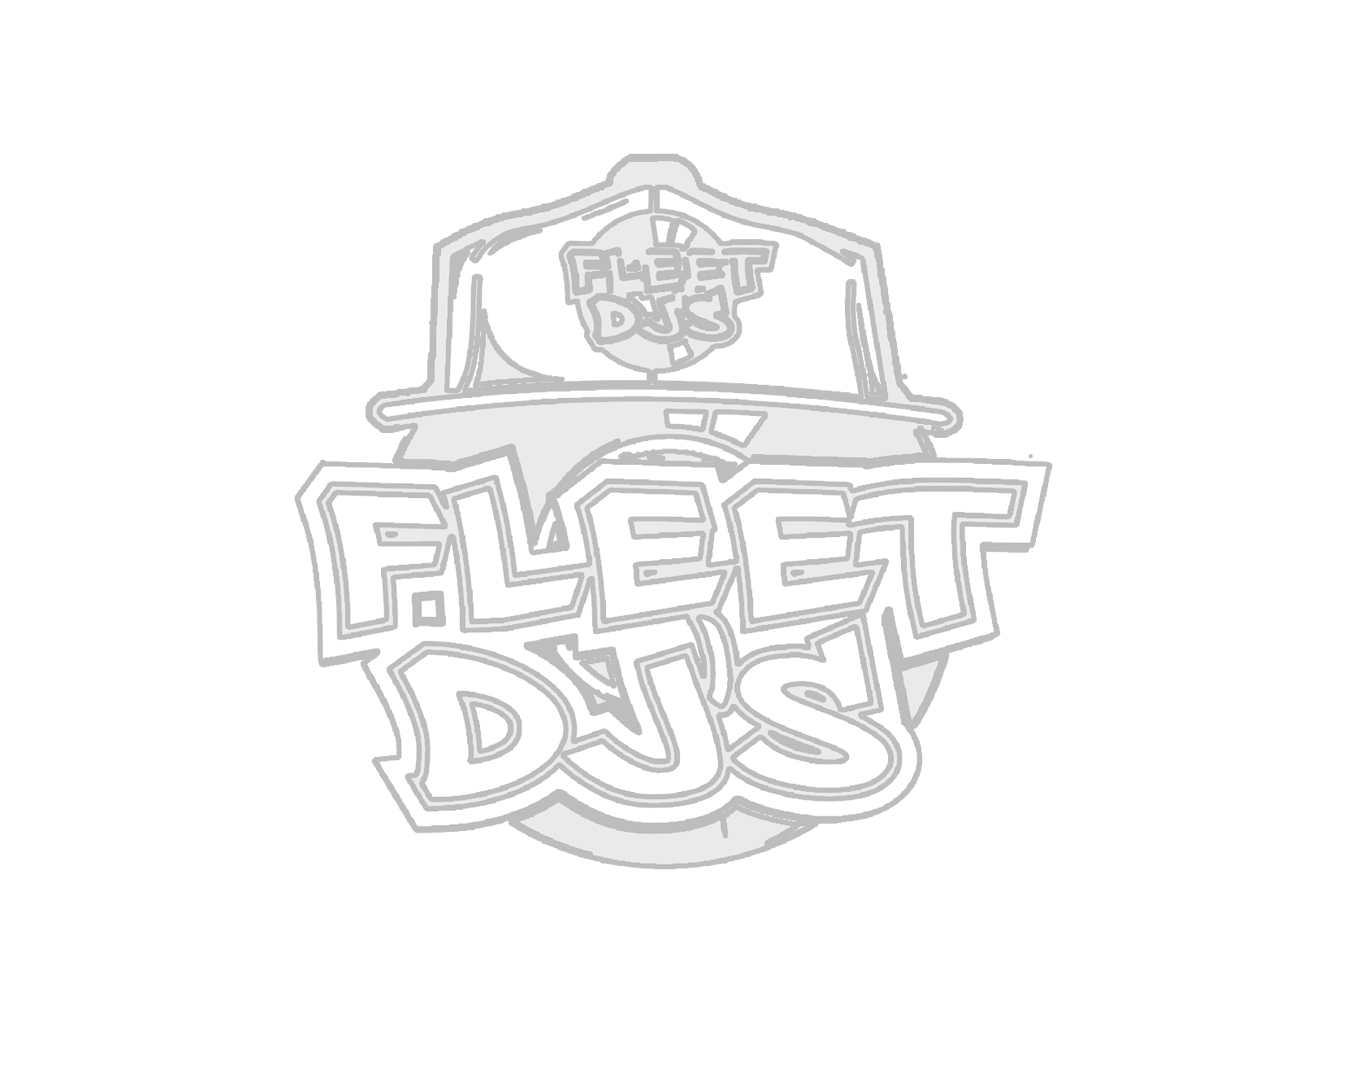 Fleet DJs BREAKING HITS